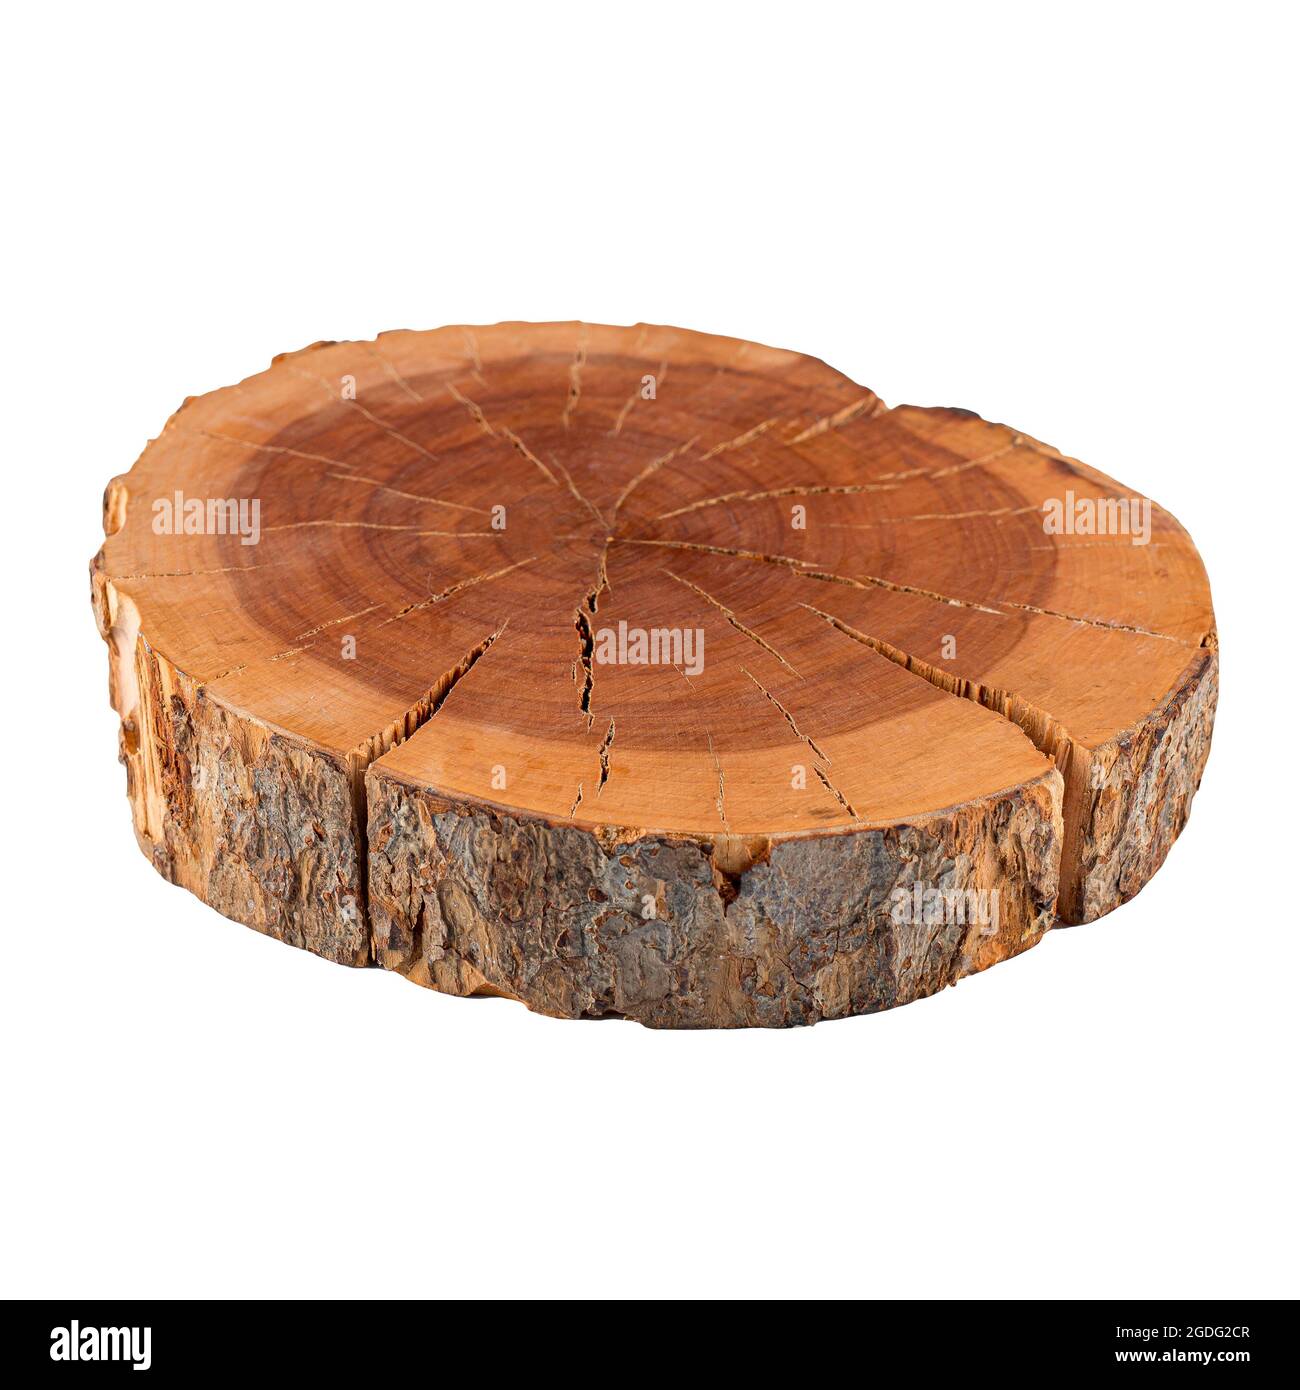 Isolated natural decorative pine round wood slice Stock Photo